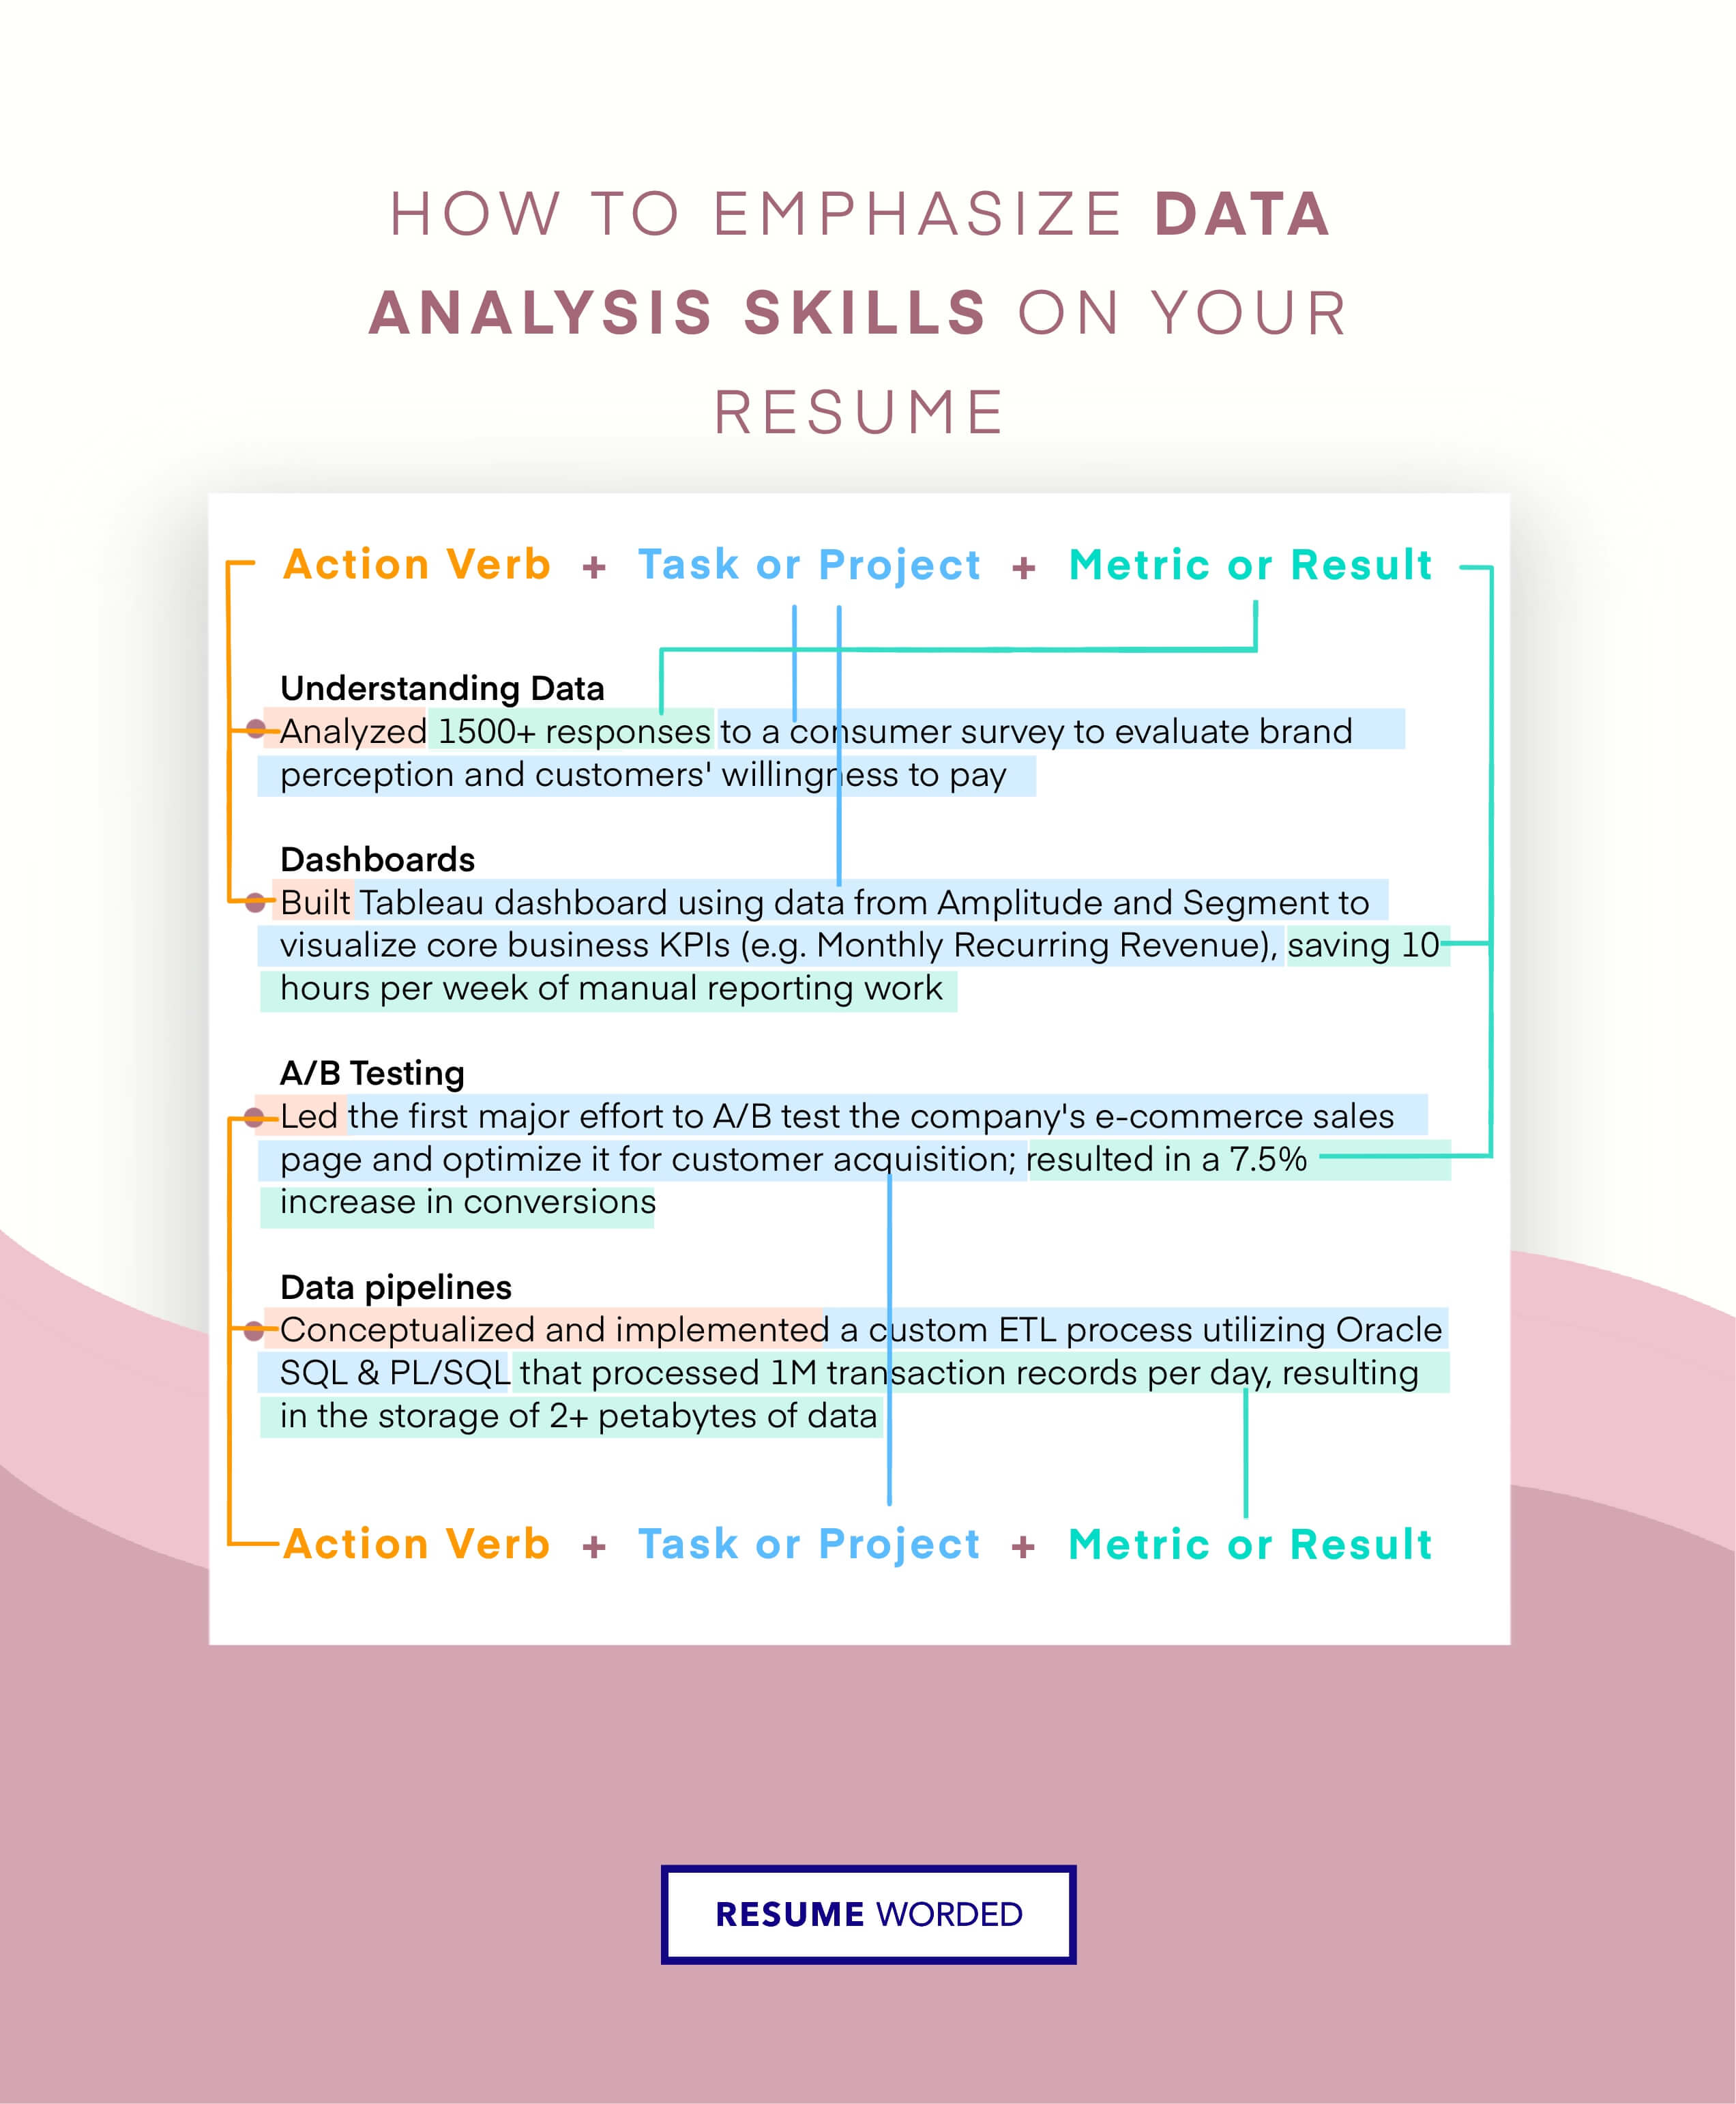 Showcase your Data Analysis Skills - Digital Marketing Manager CV